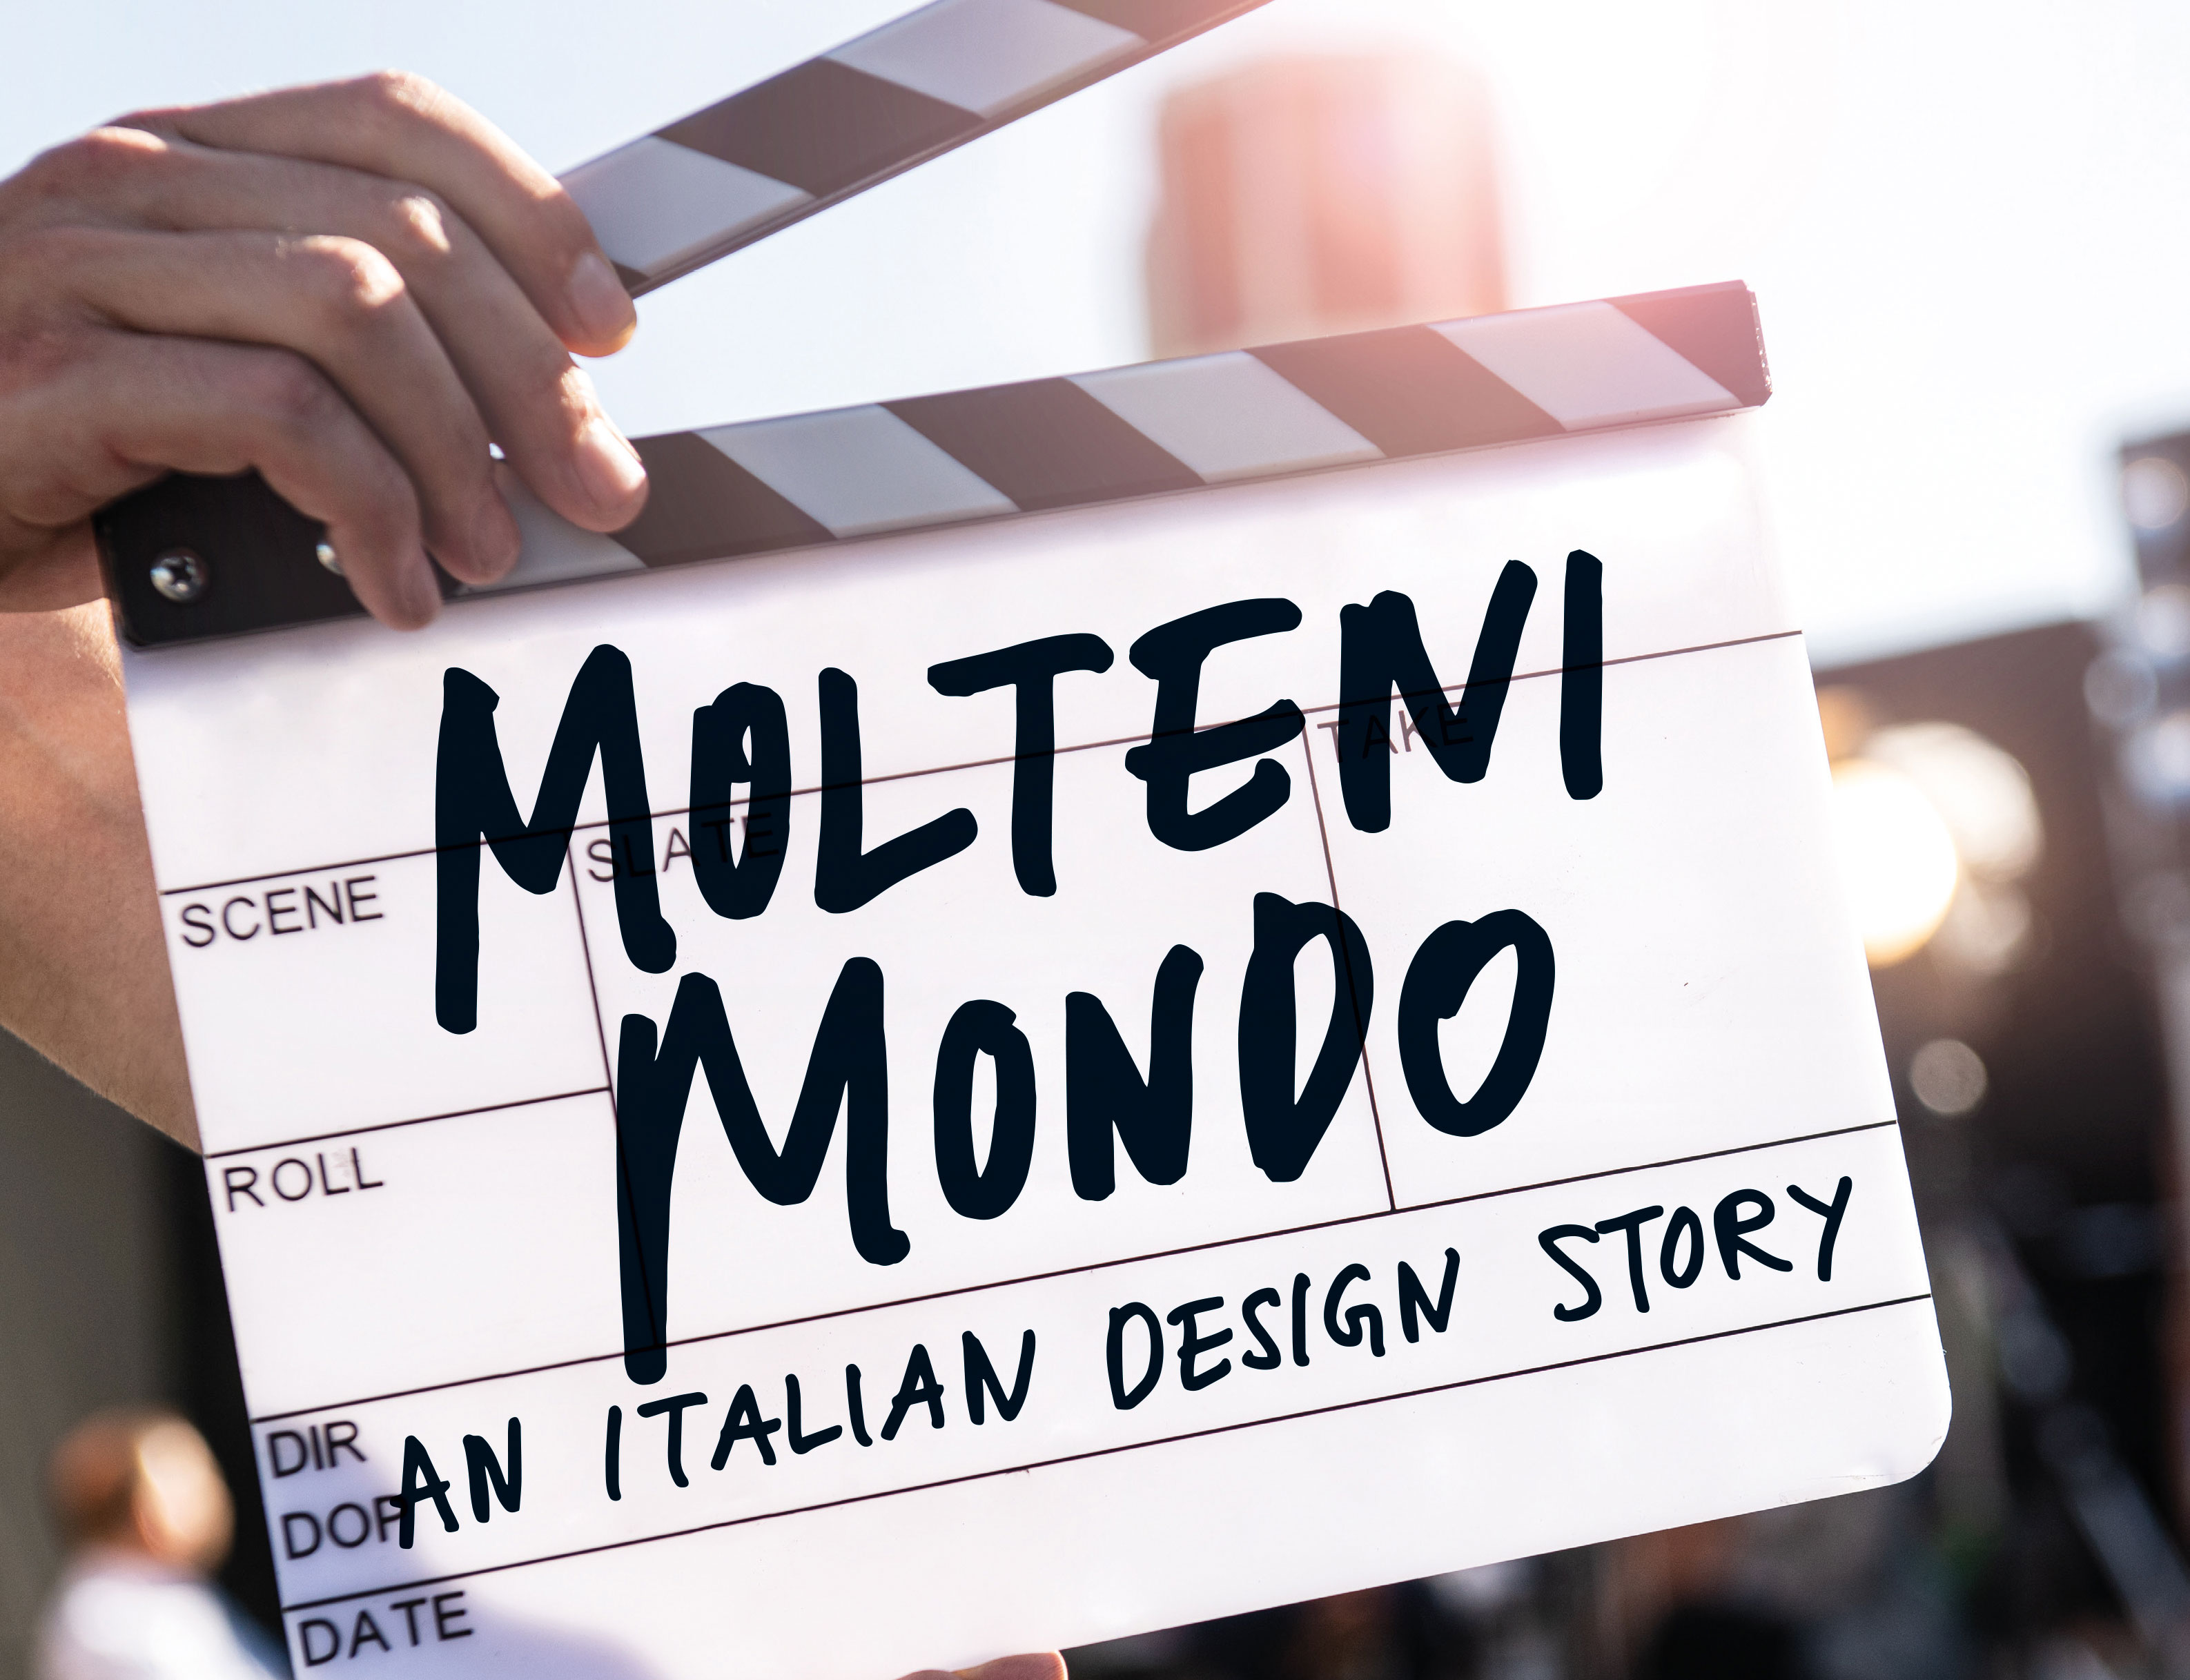 90 Years of Molteni Mondo